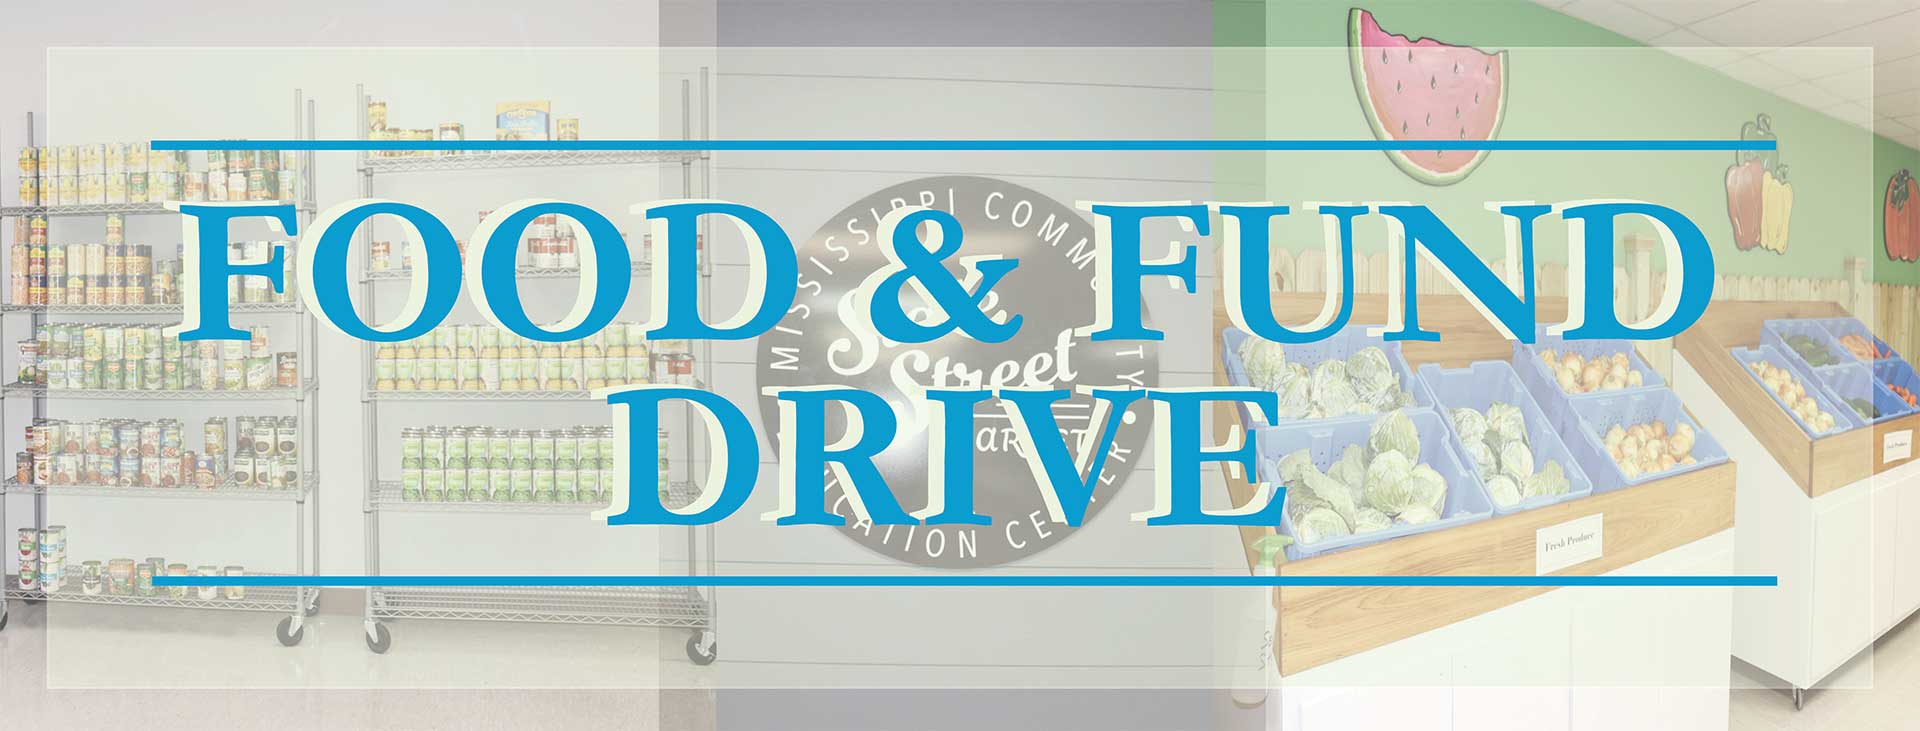 Food & Fund Drive